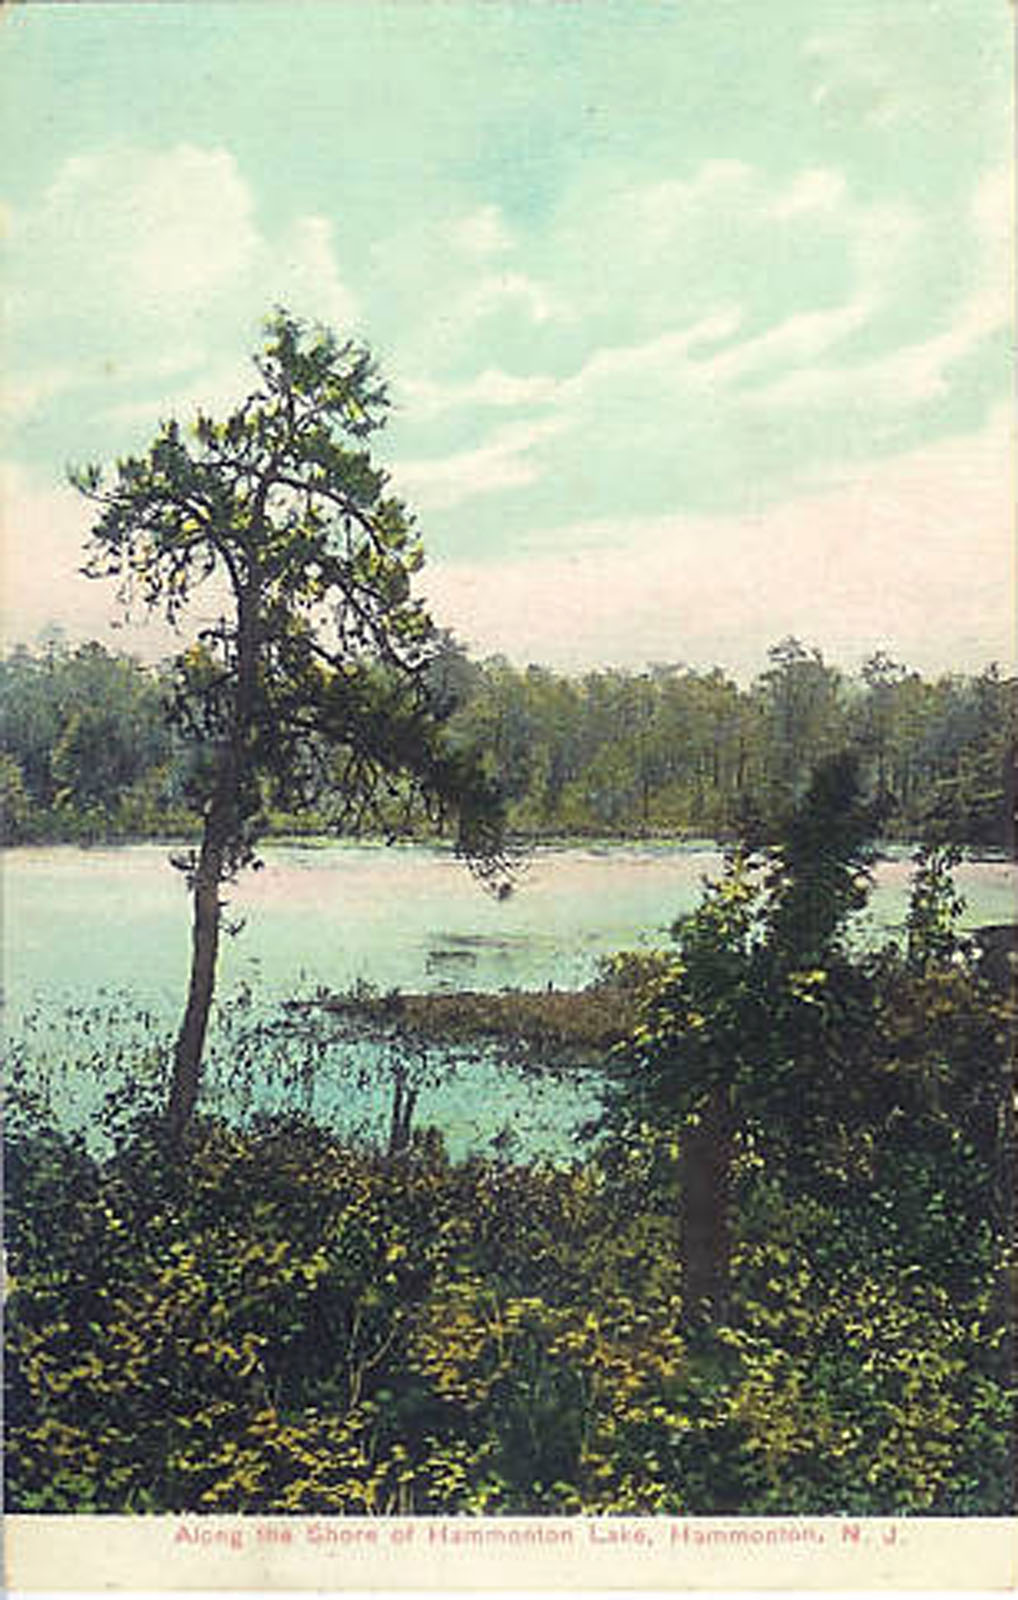 Hammonton - A view of Hammonton Lake